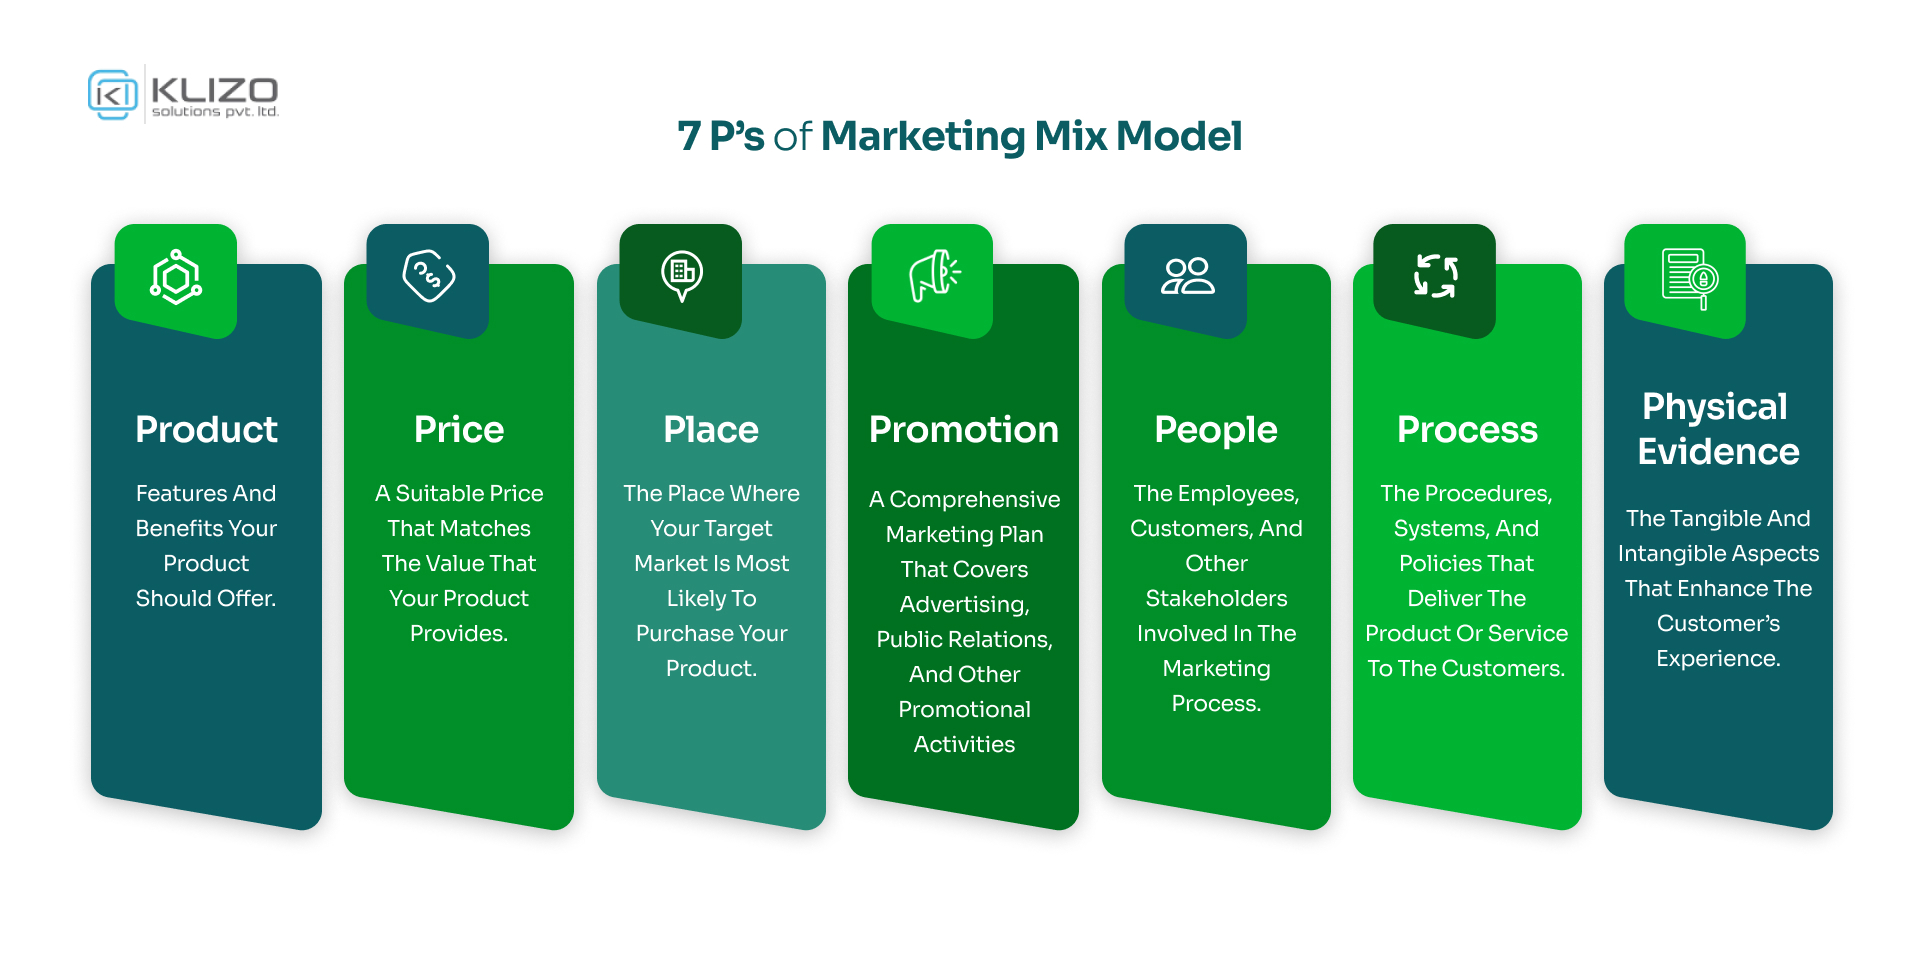 7 P’s of Marketing Mix Model